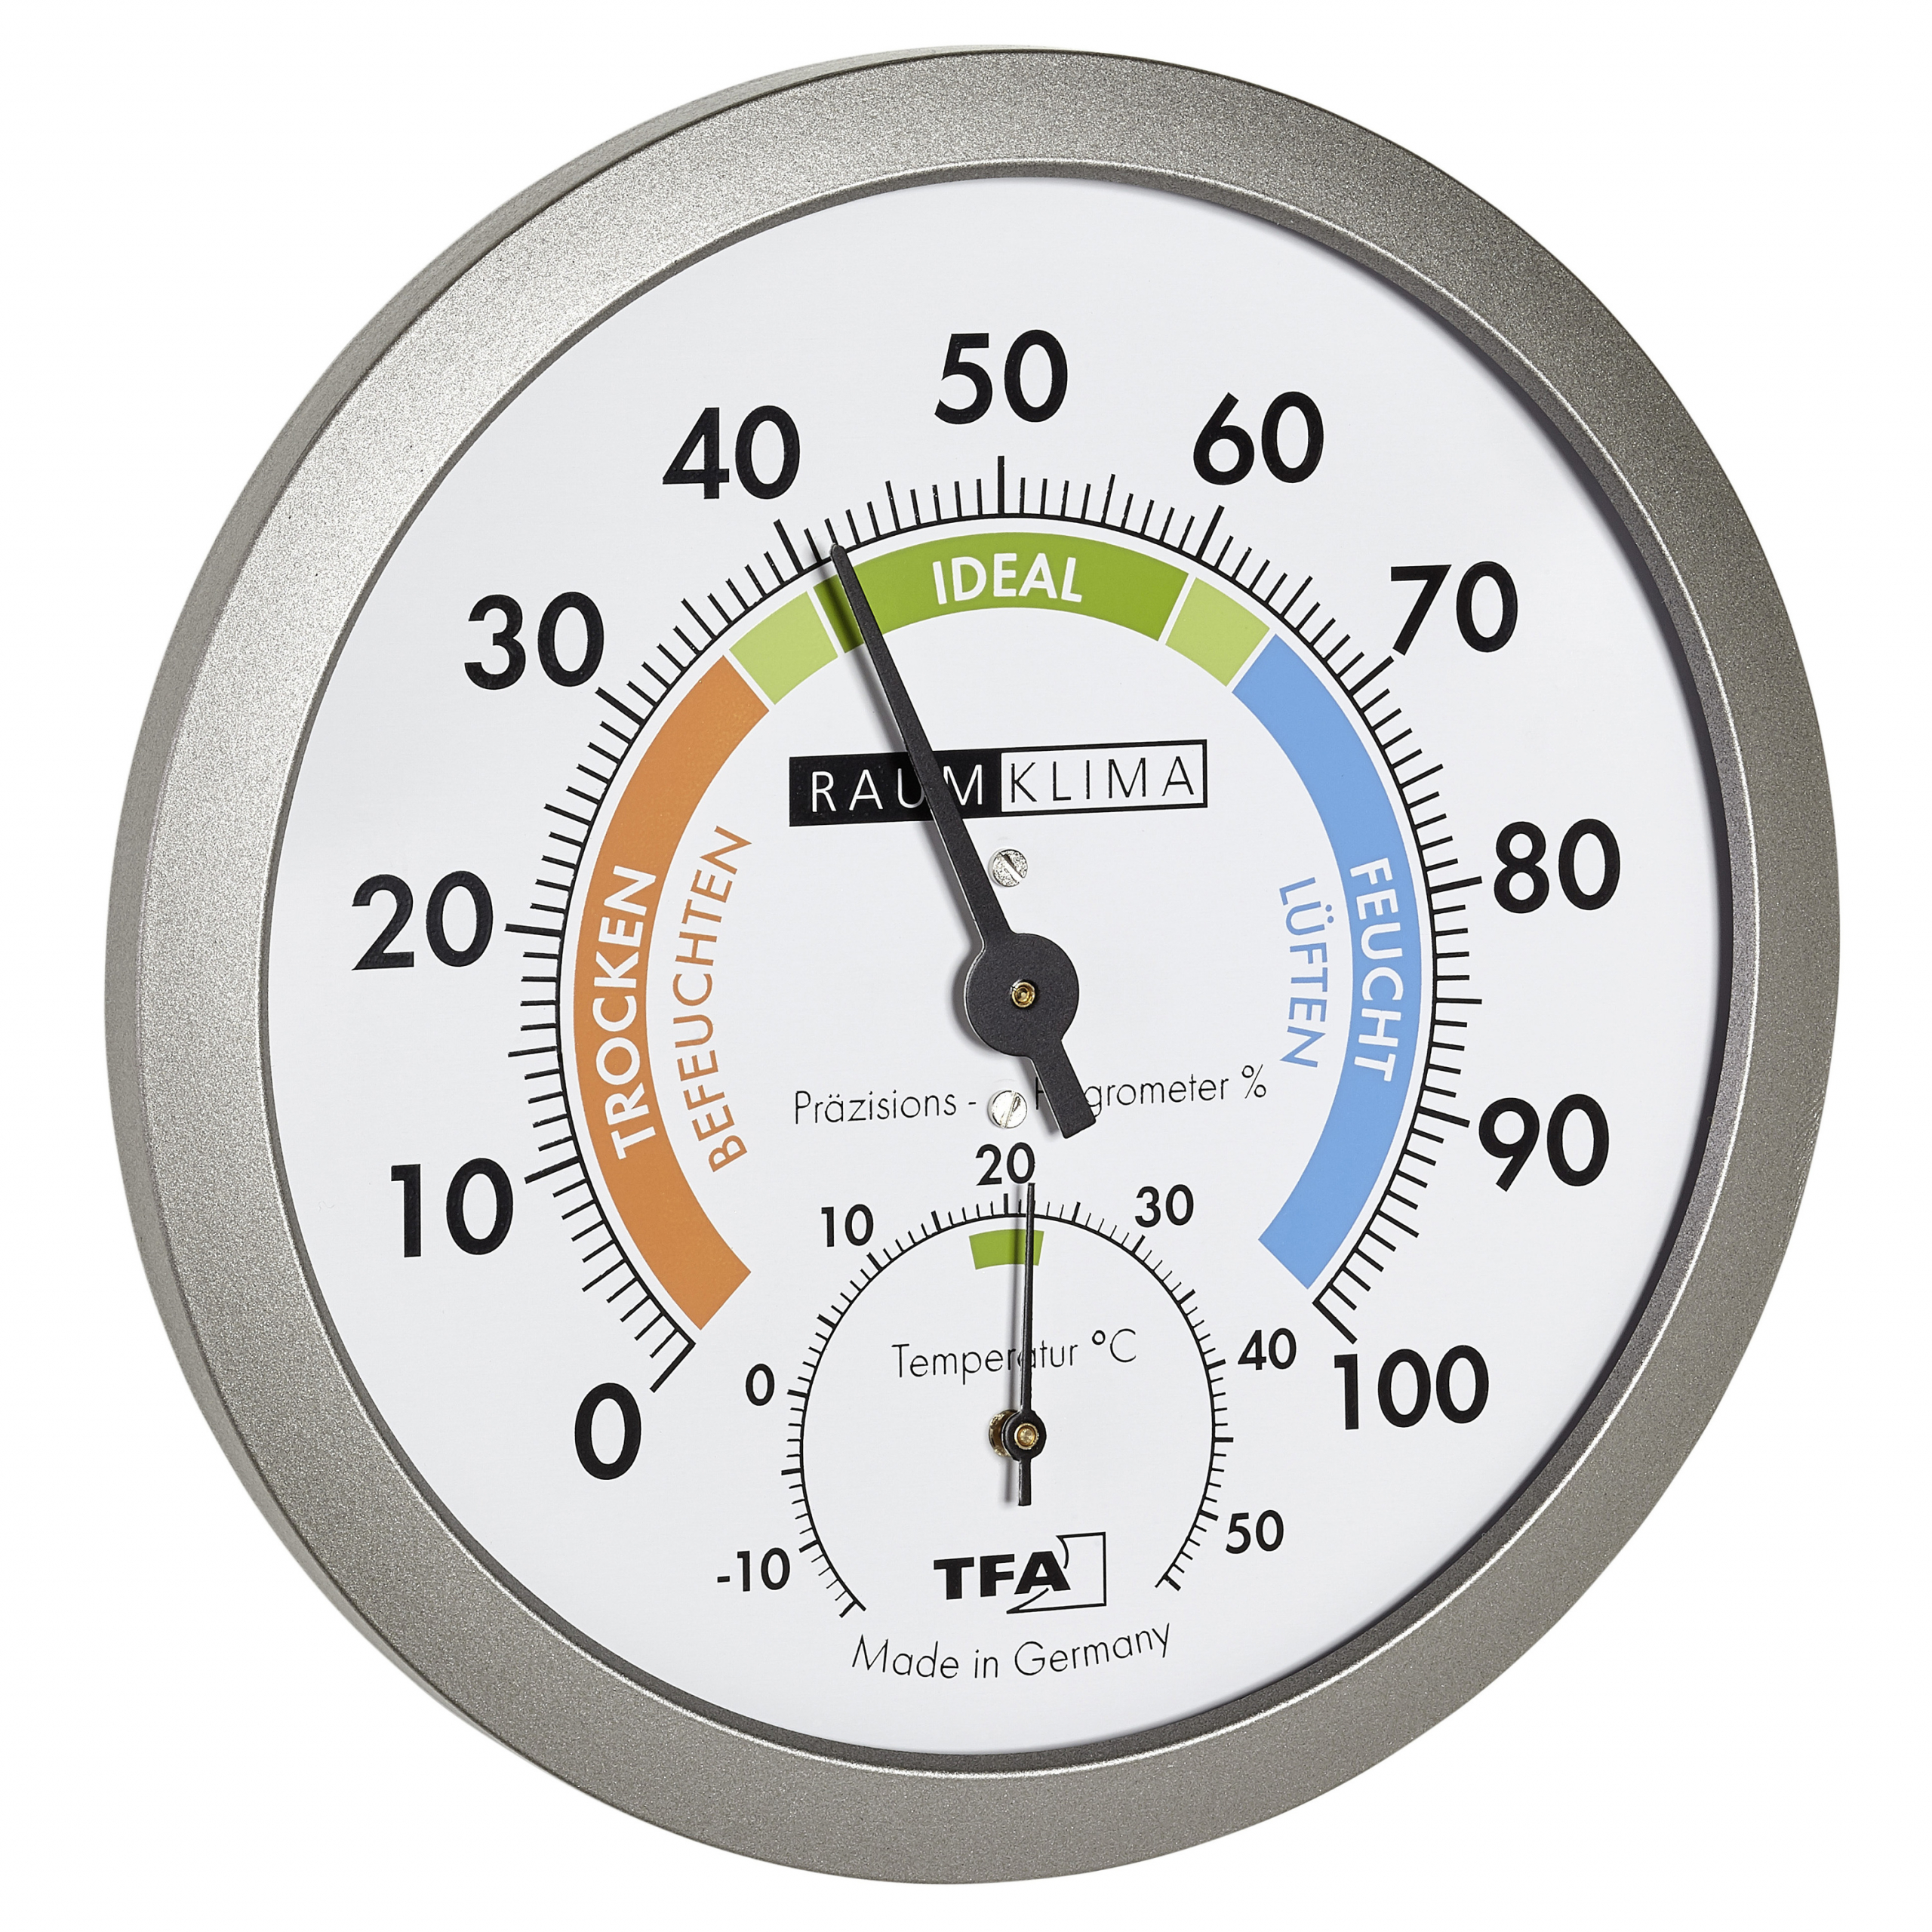 Analogue thermo-hygrometer